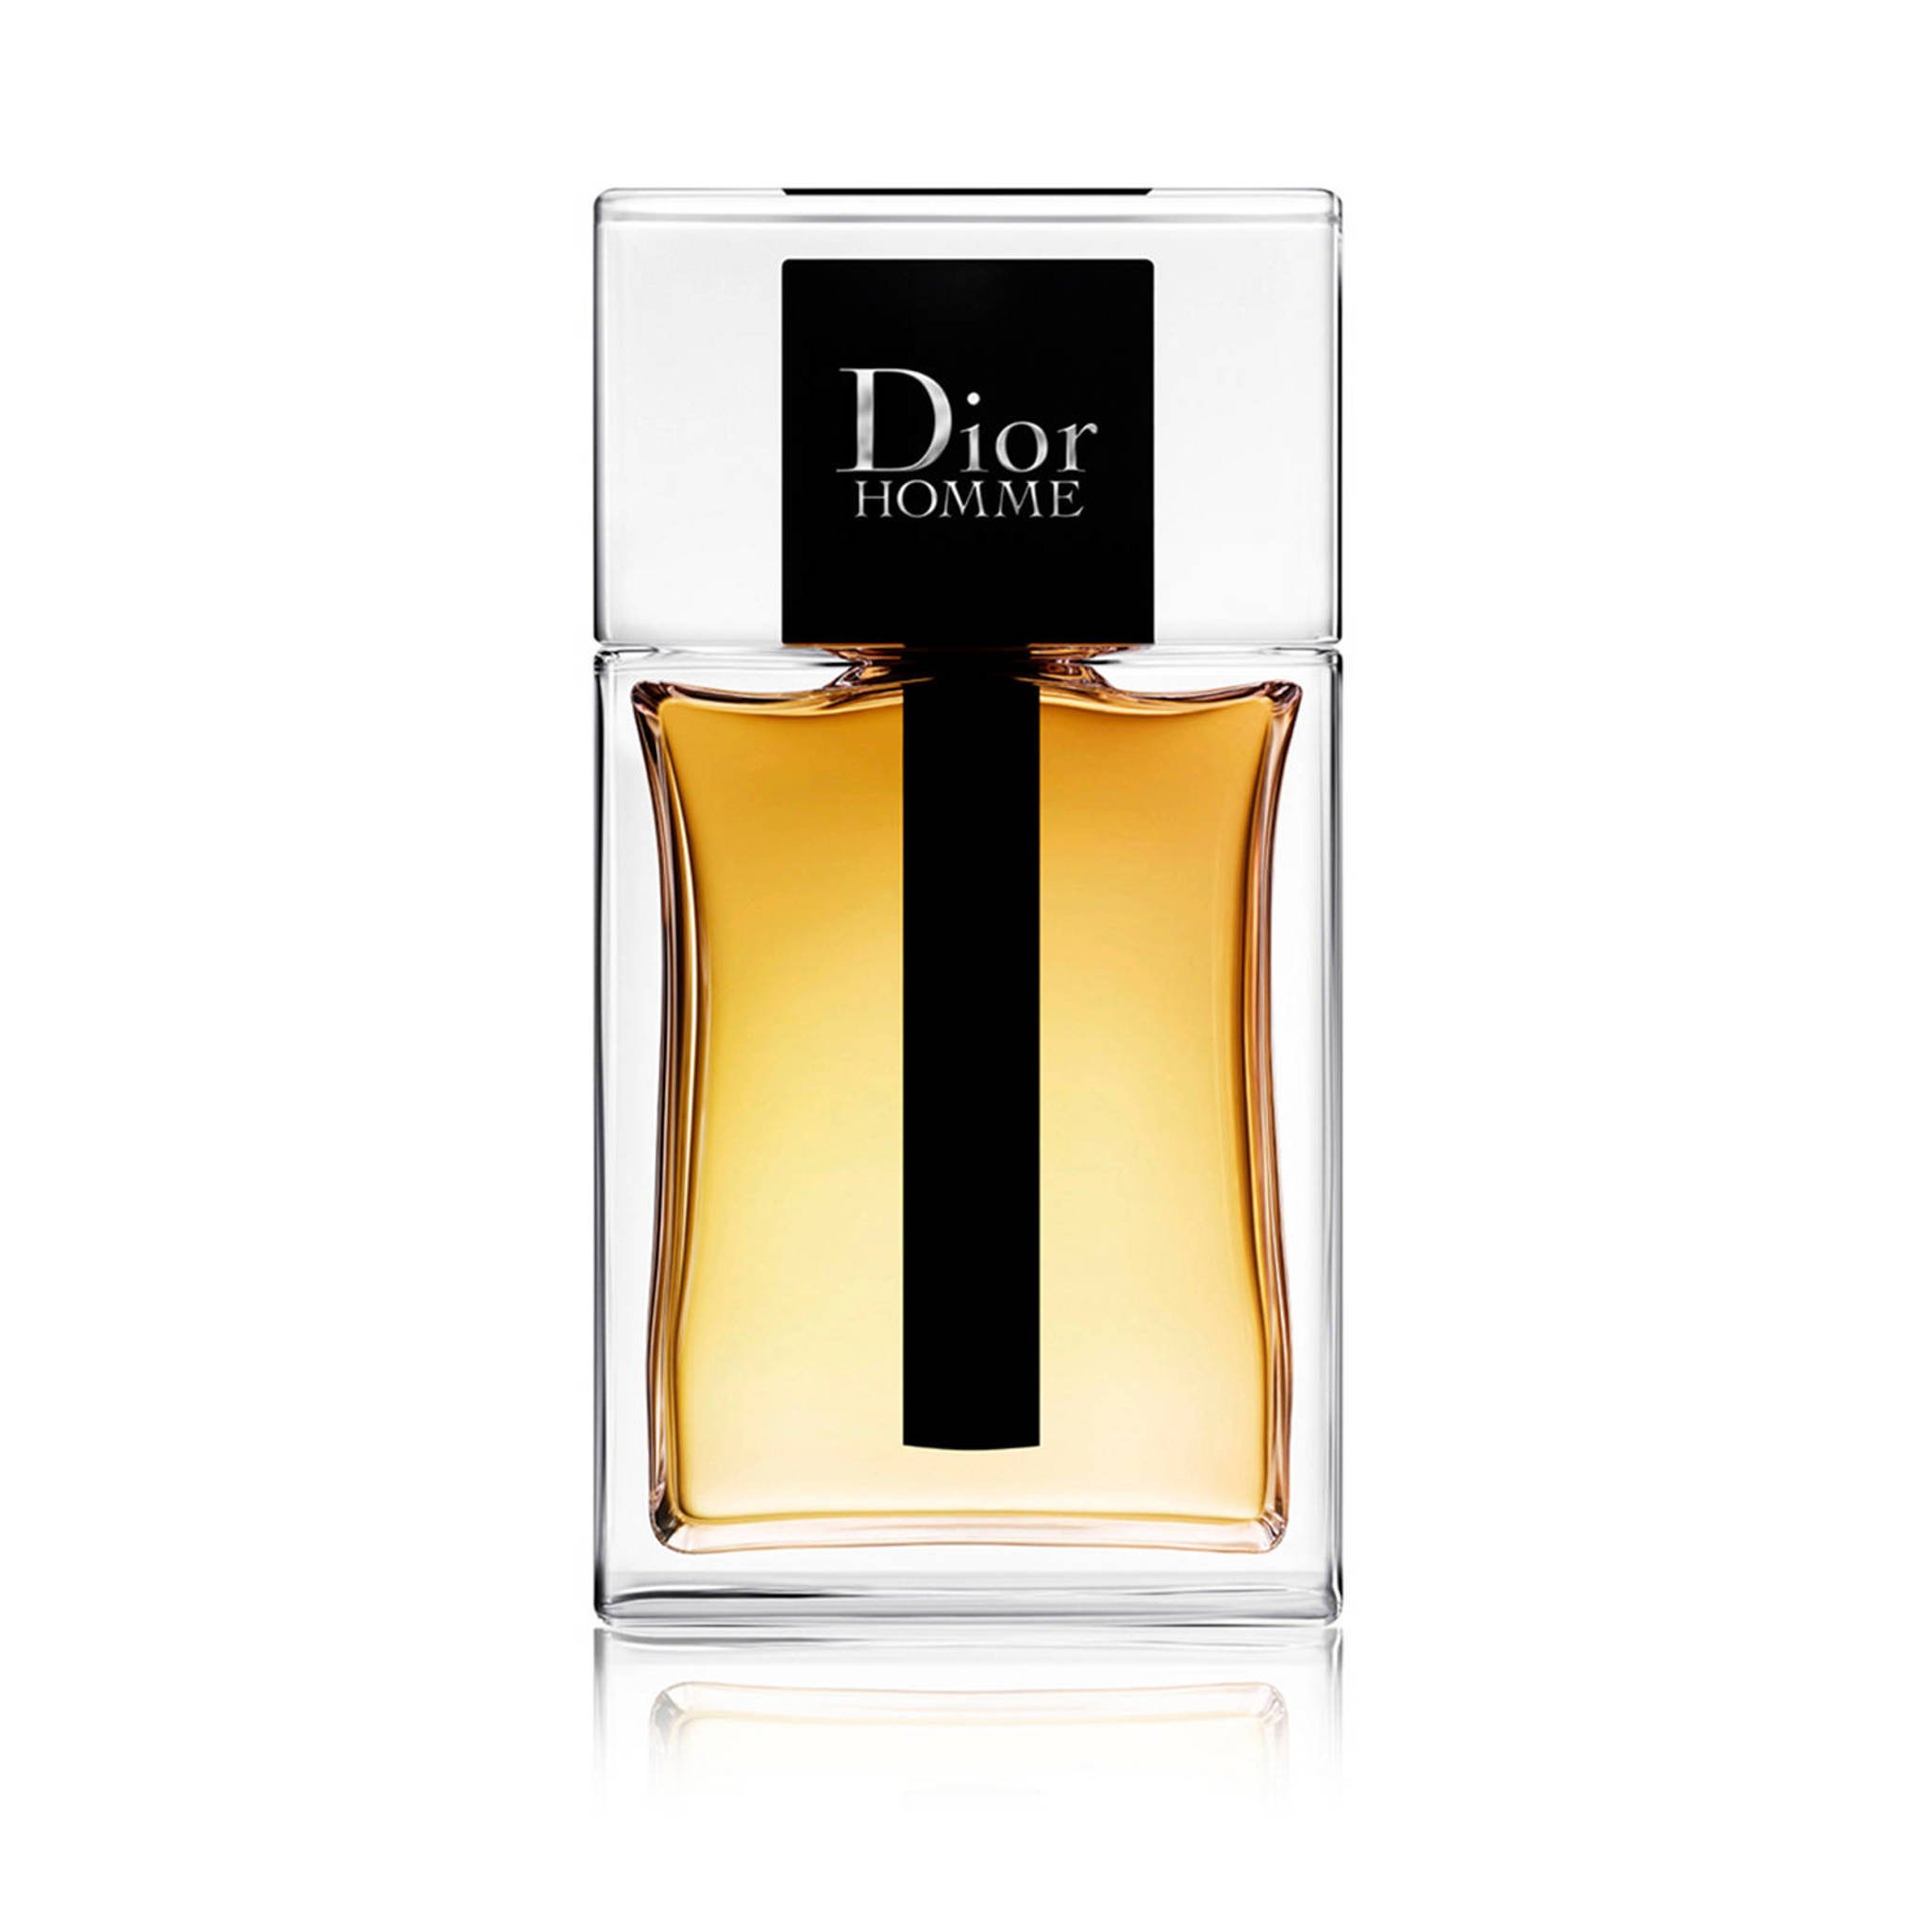 Homme - Christian Dior - 100 ml - edt